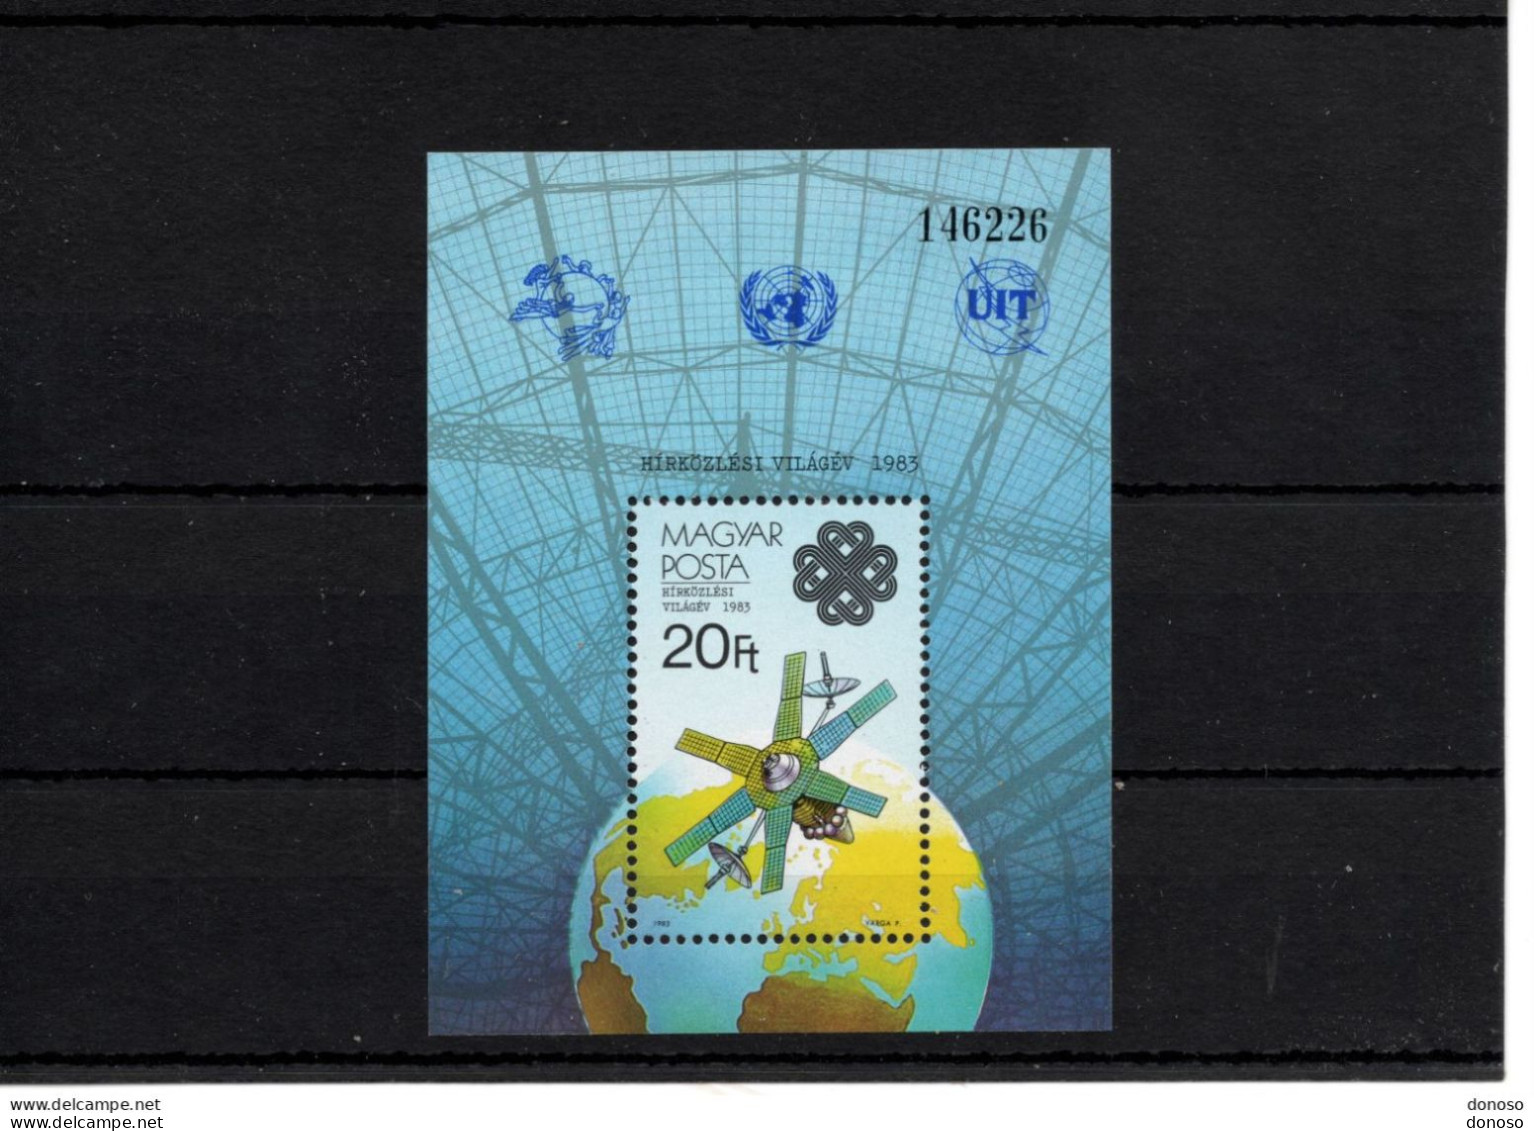 HONGRIE 1983 Année Mondiale Des Communications Yvert BF 170, Michel Block 167 NEUF** MNH Cote 7 Euros - Blocks & Sheetlets